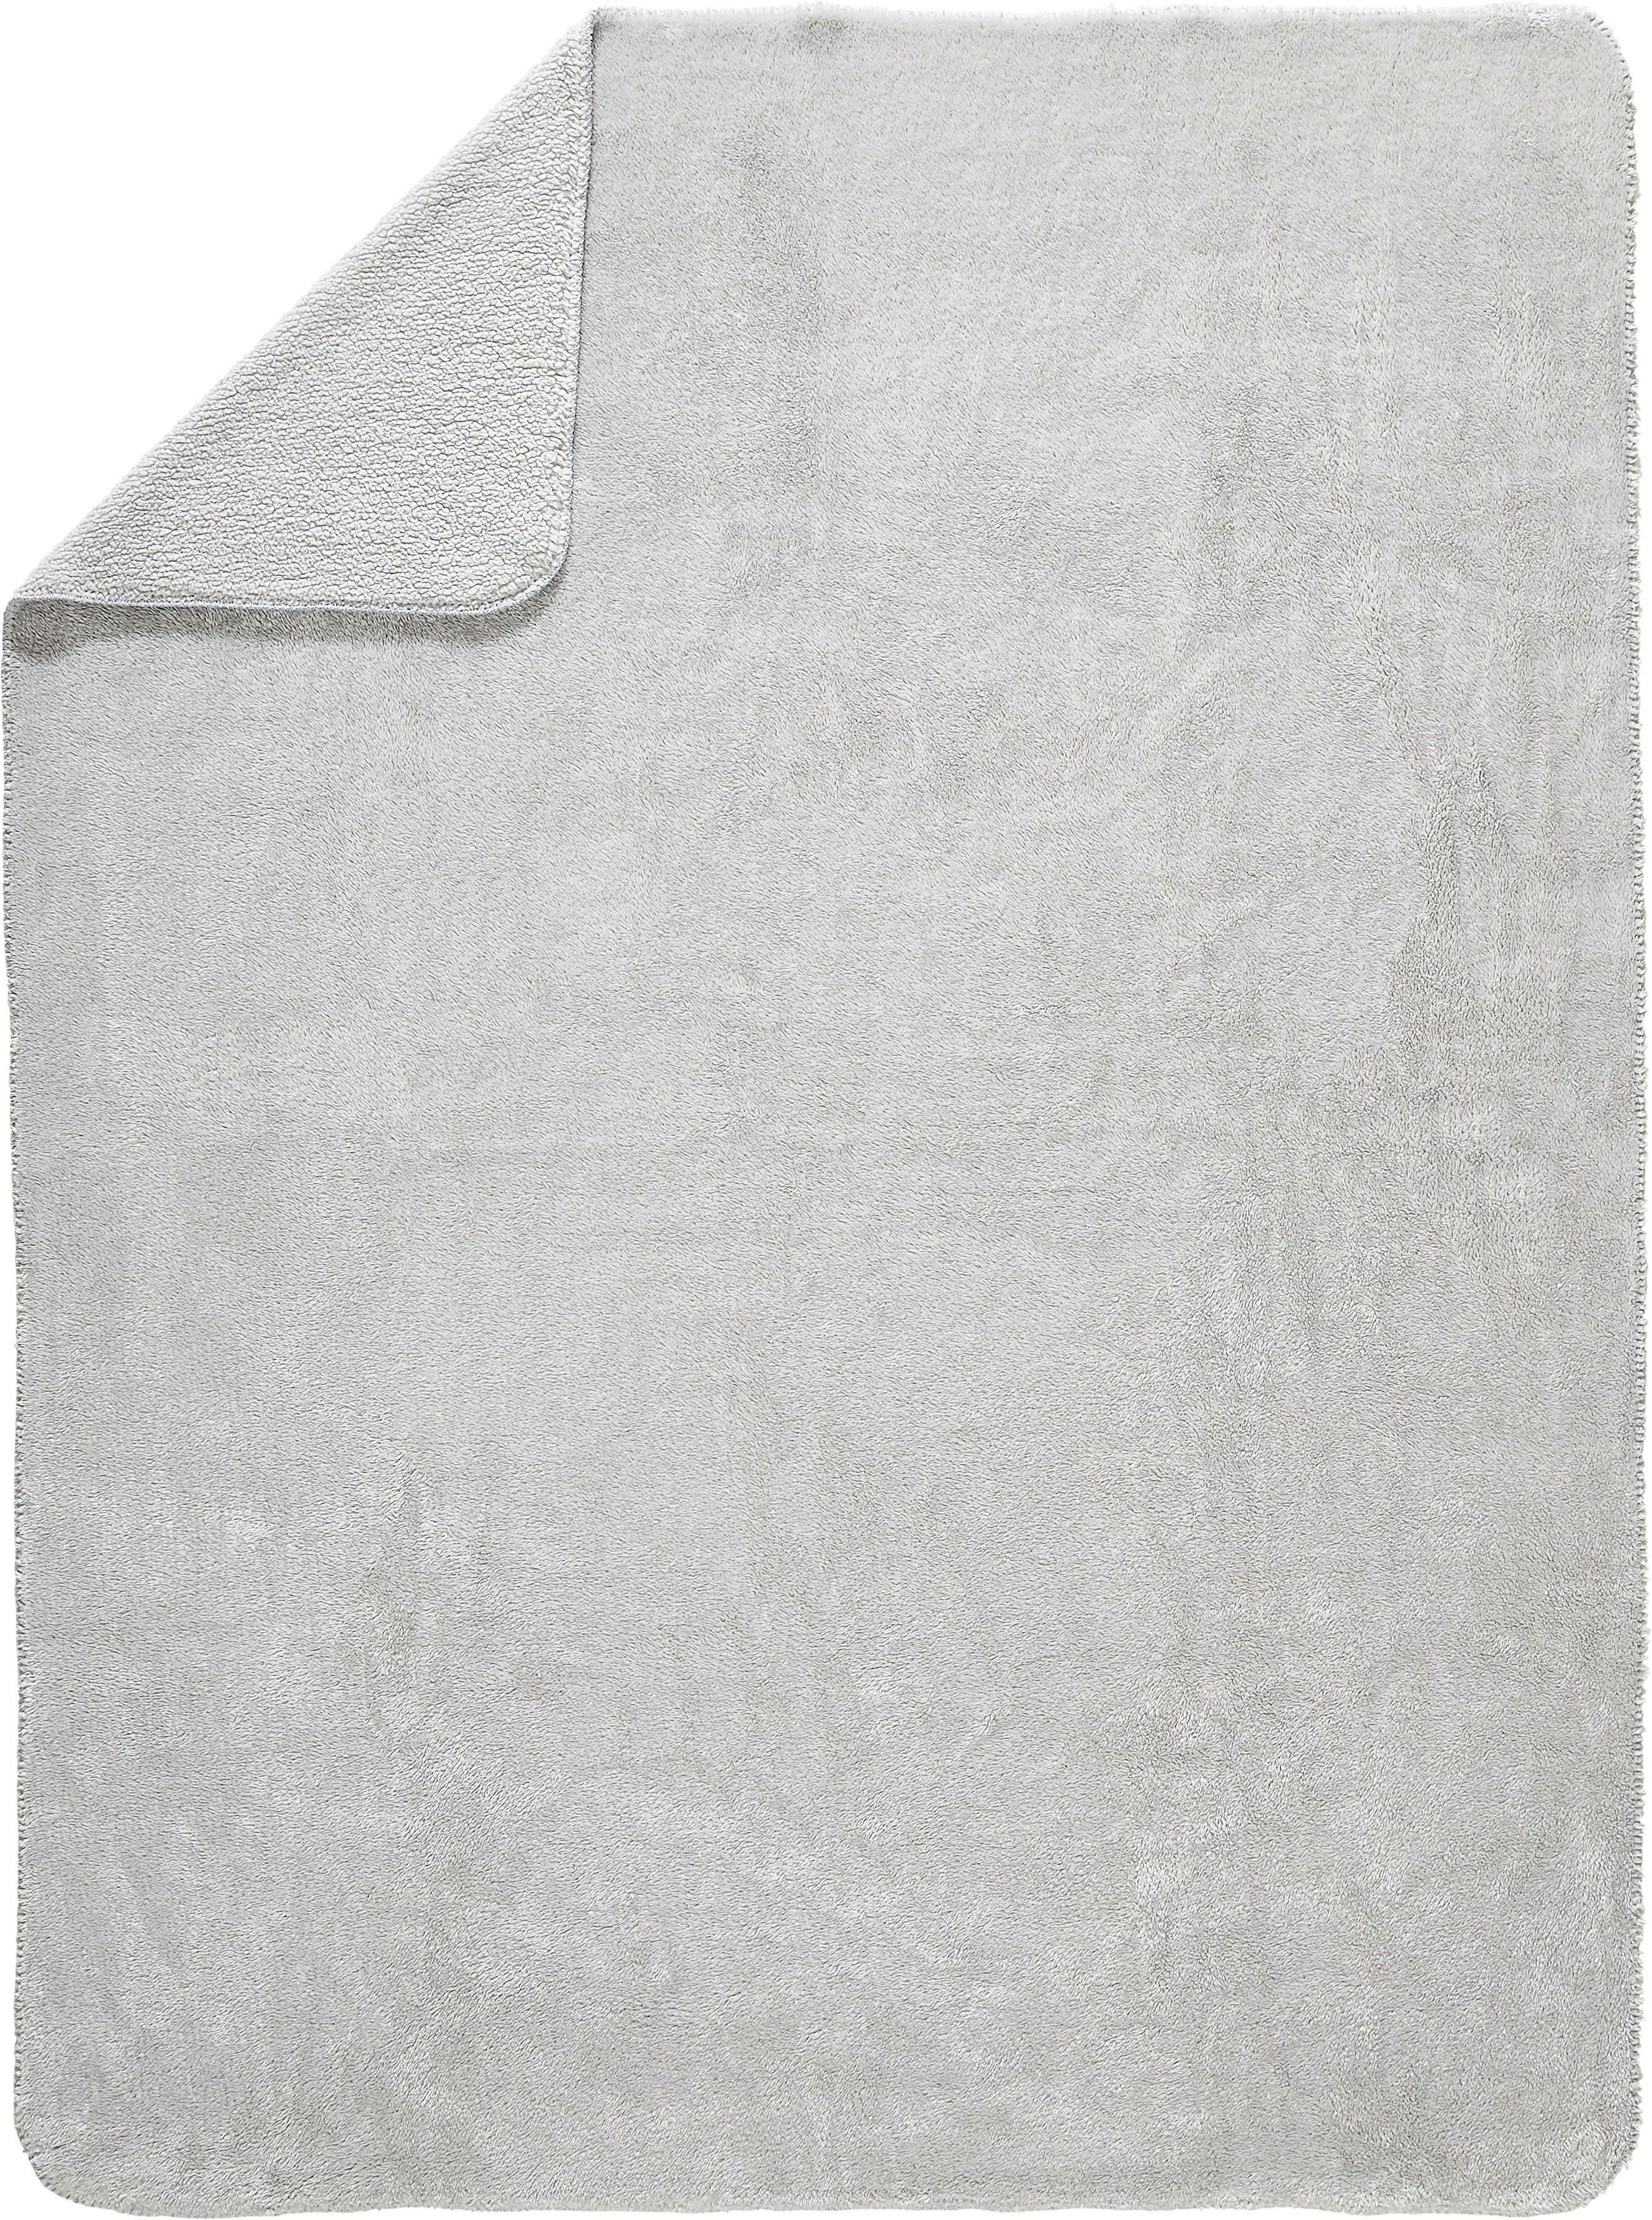 DEKA 150/200 cm  - srebrne boje, Basics, tekstil (150/200cm) - Novel